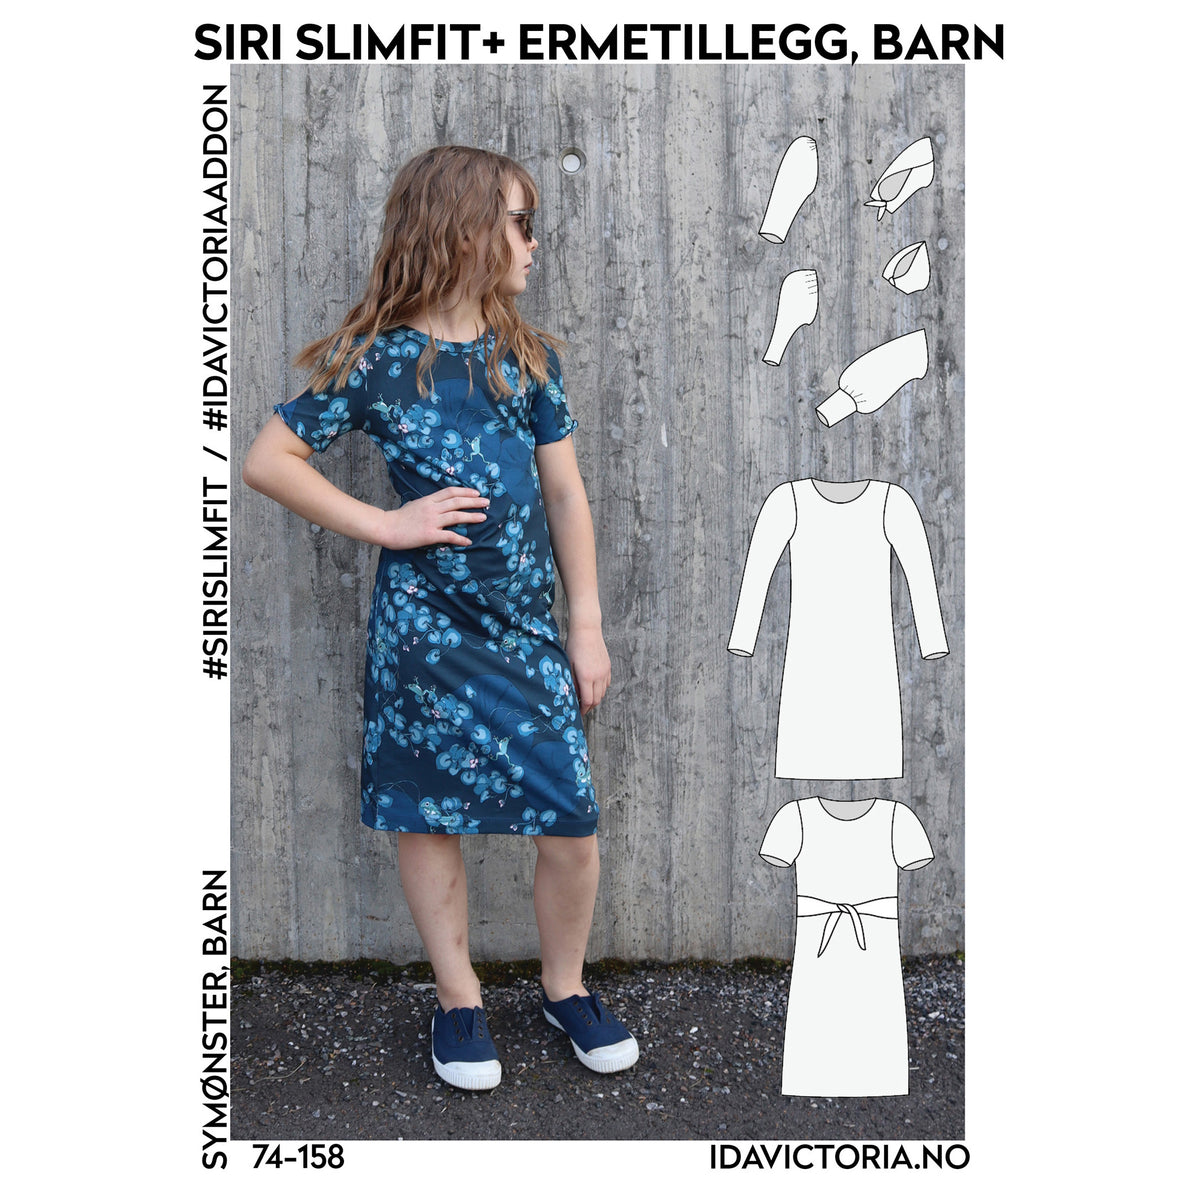 Ida Victoria - Siri Slimfit + ermetillegg, BARN (74-158)